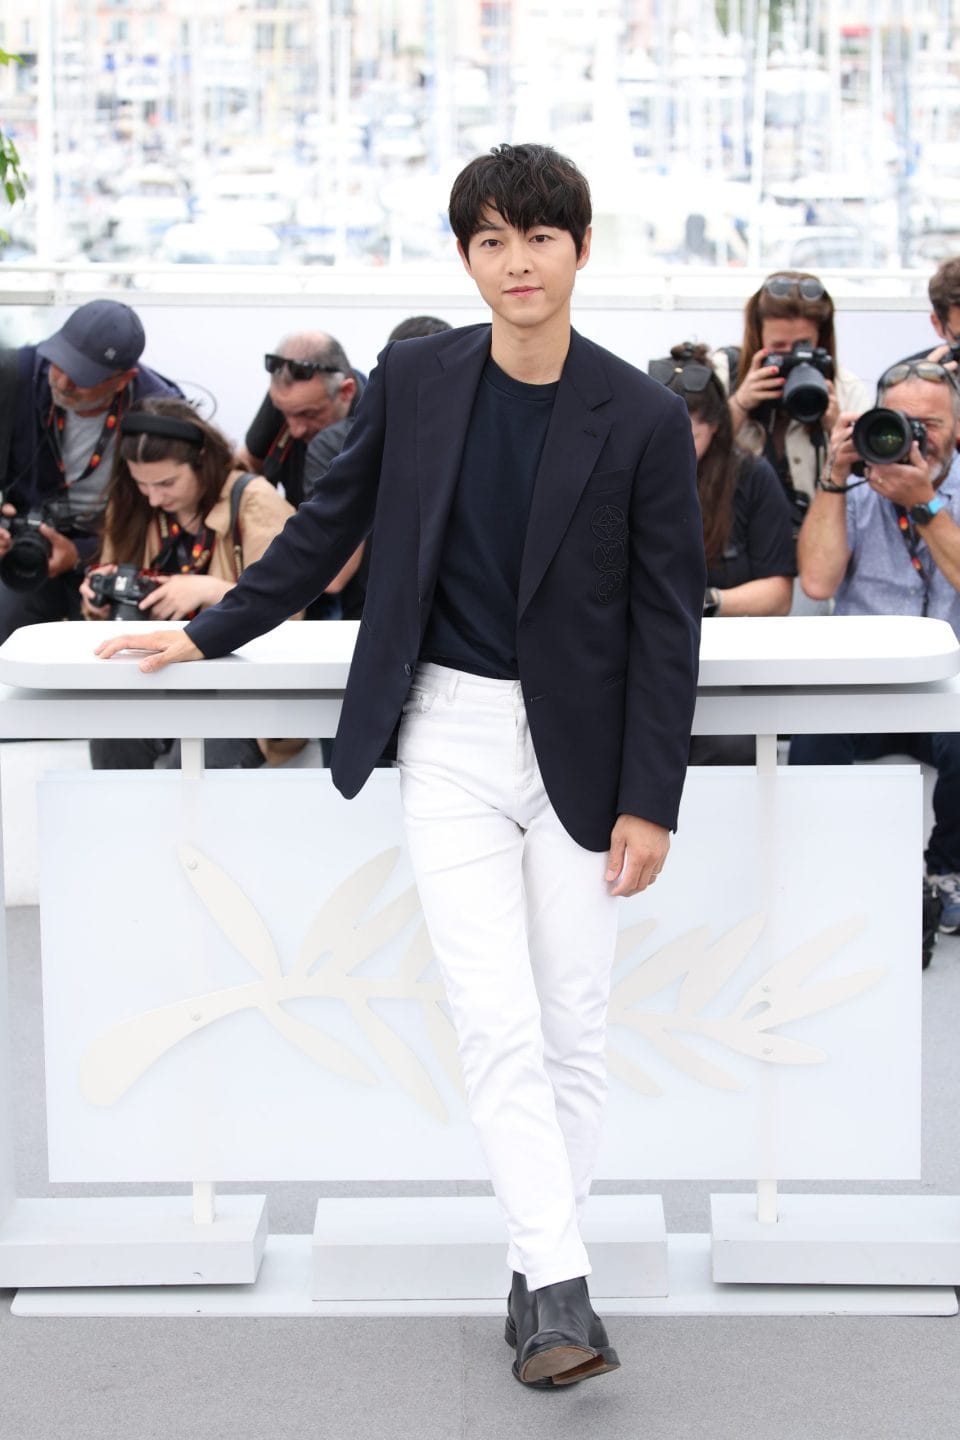 Louis Vuitton appoints Song Joong-ki as House ambassador